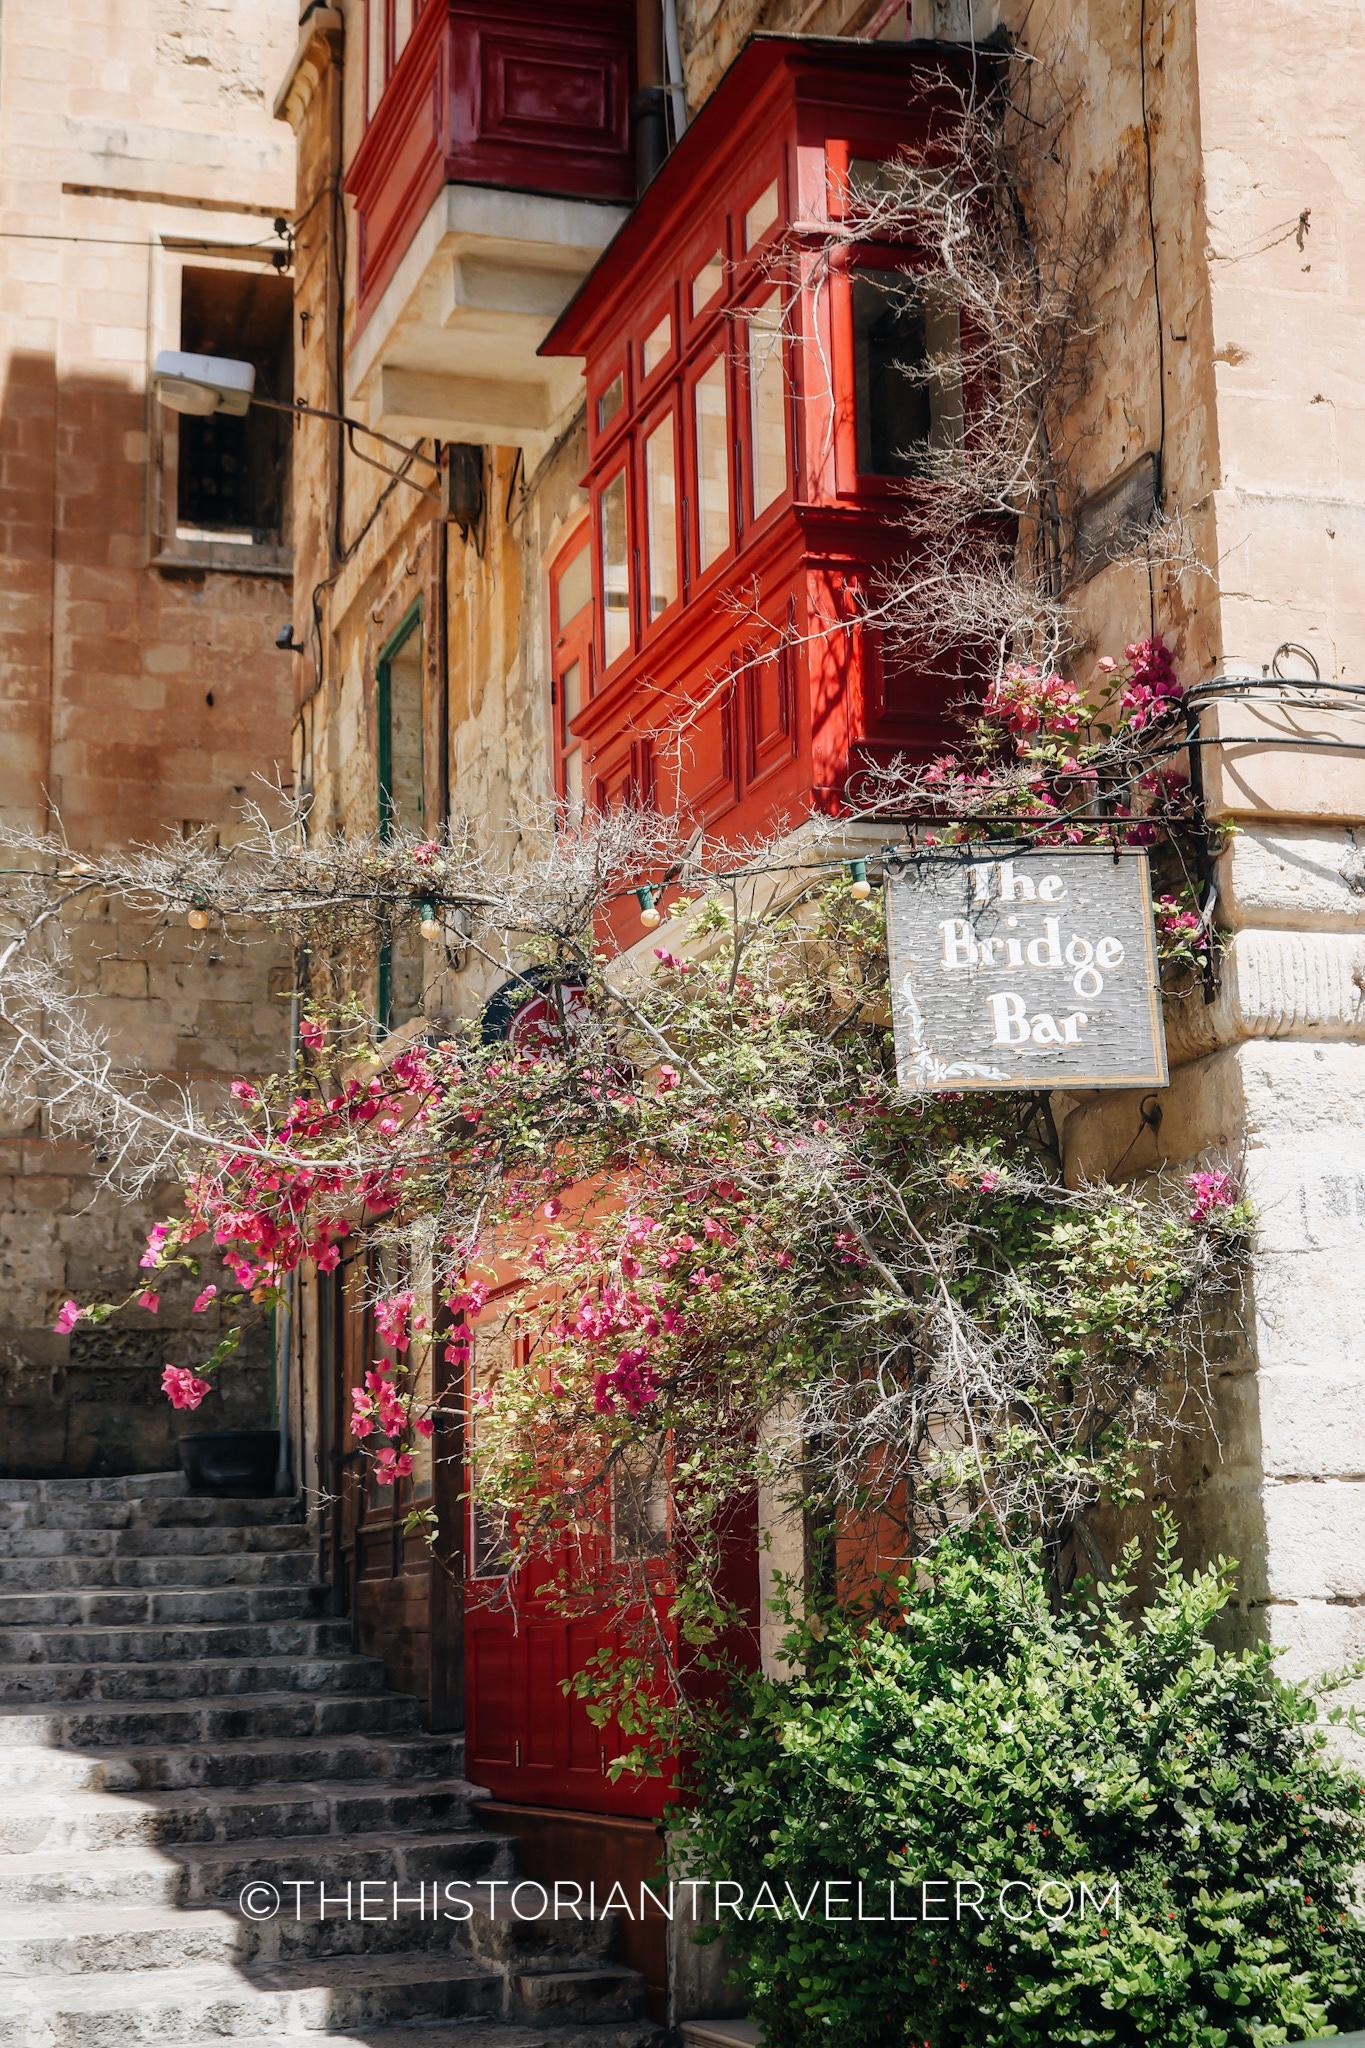 Most photogenic spots in Valletta